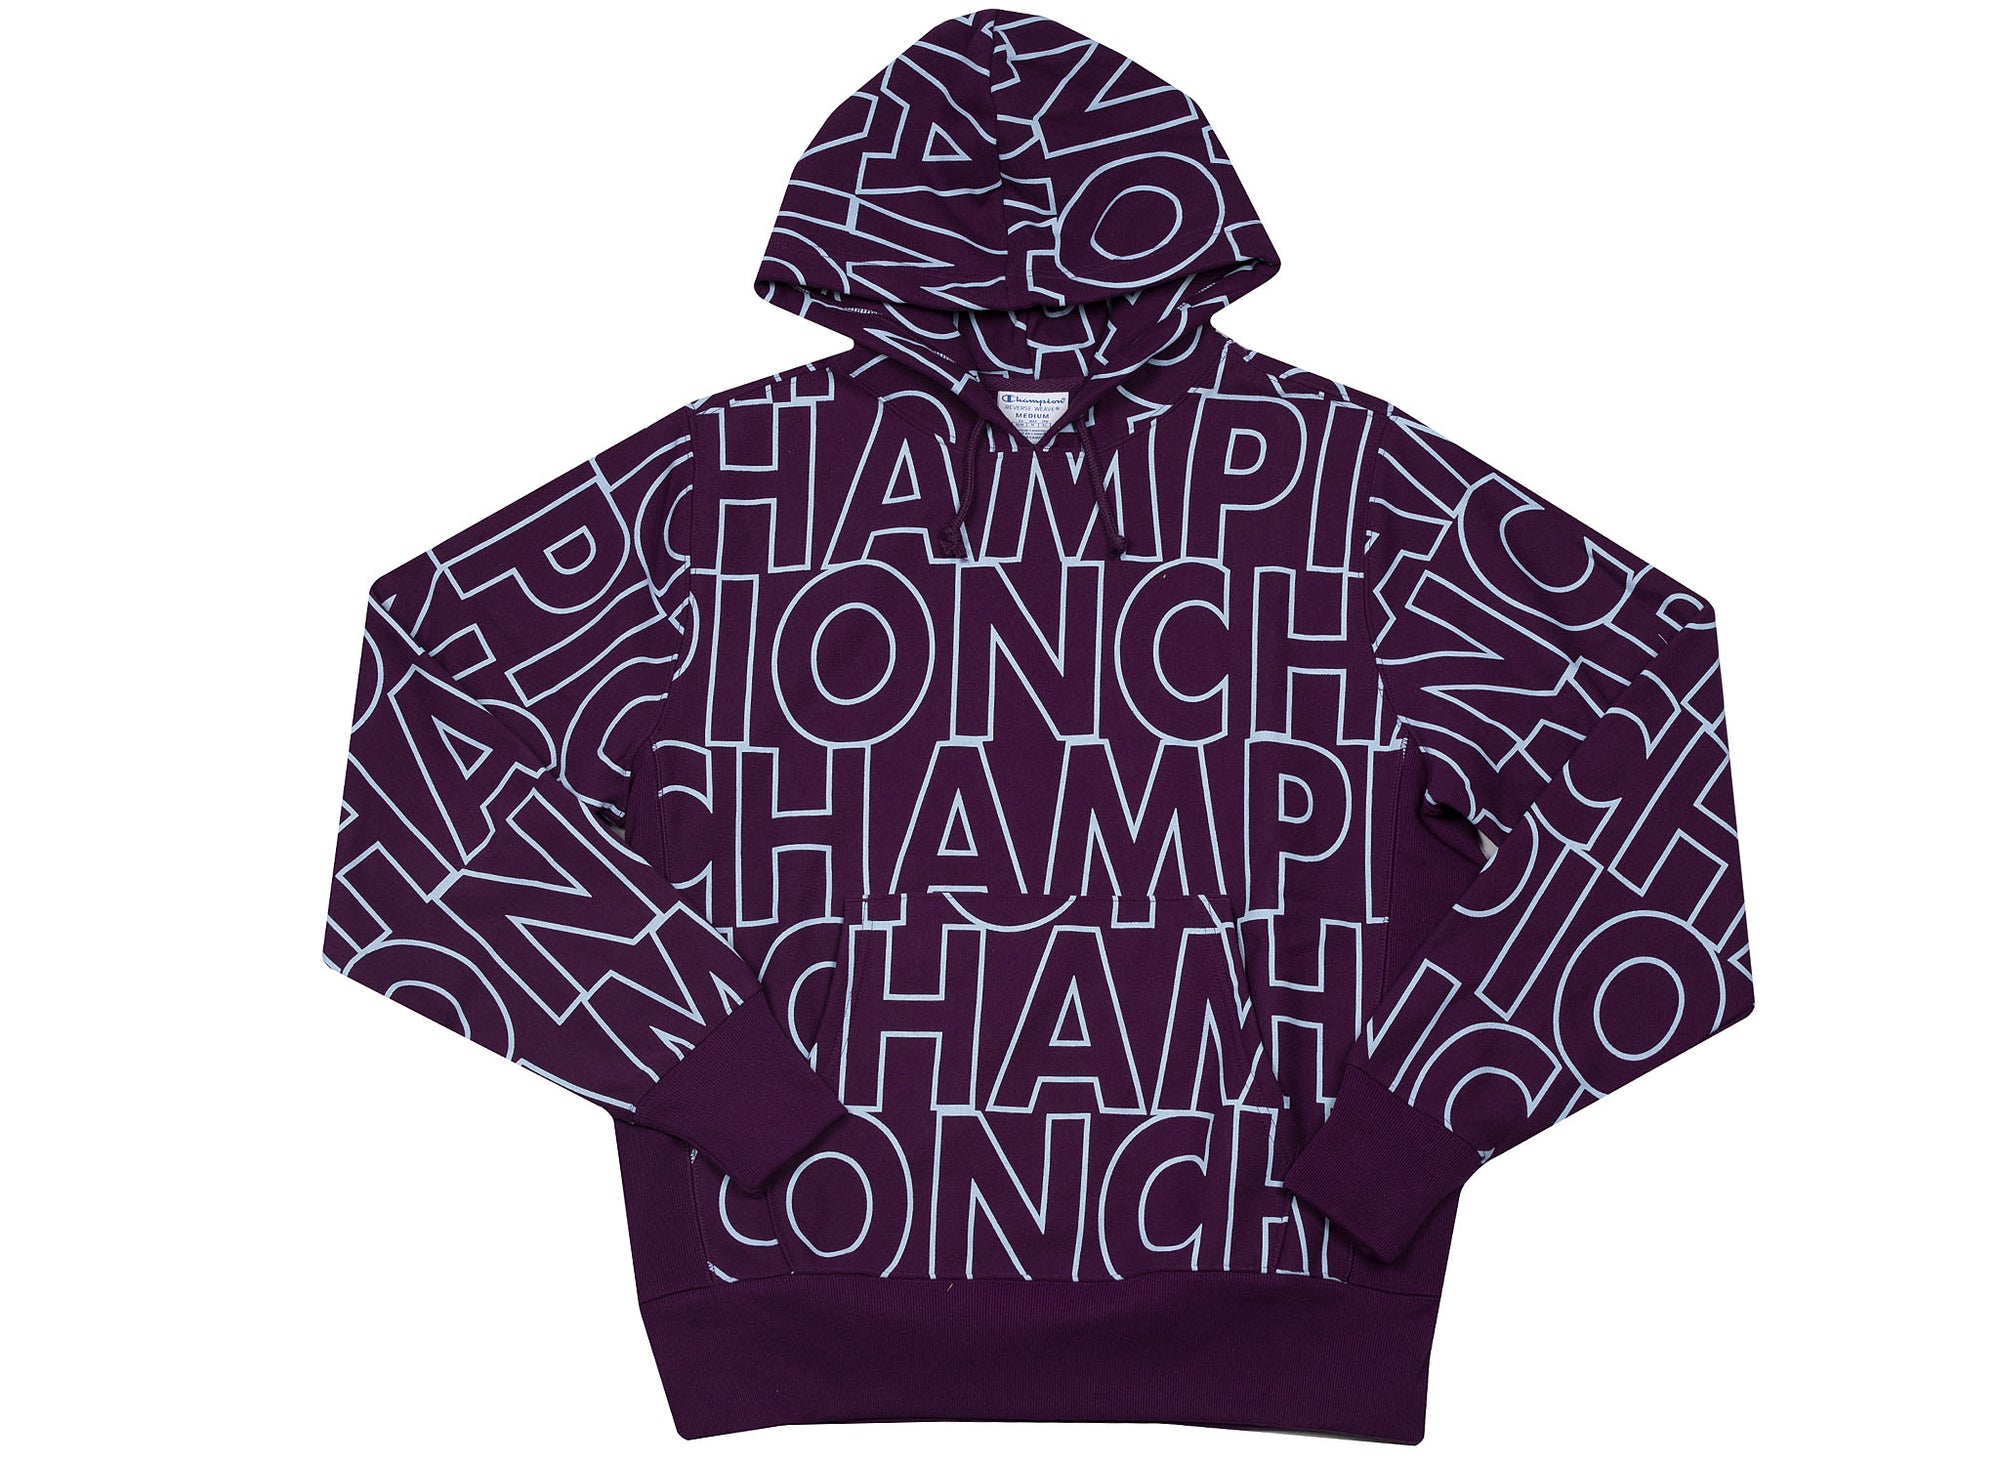 champion violet reverse weave pullover sweatshirt